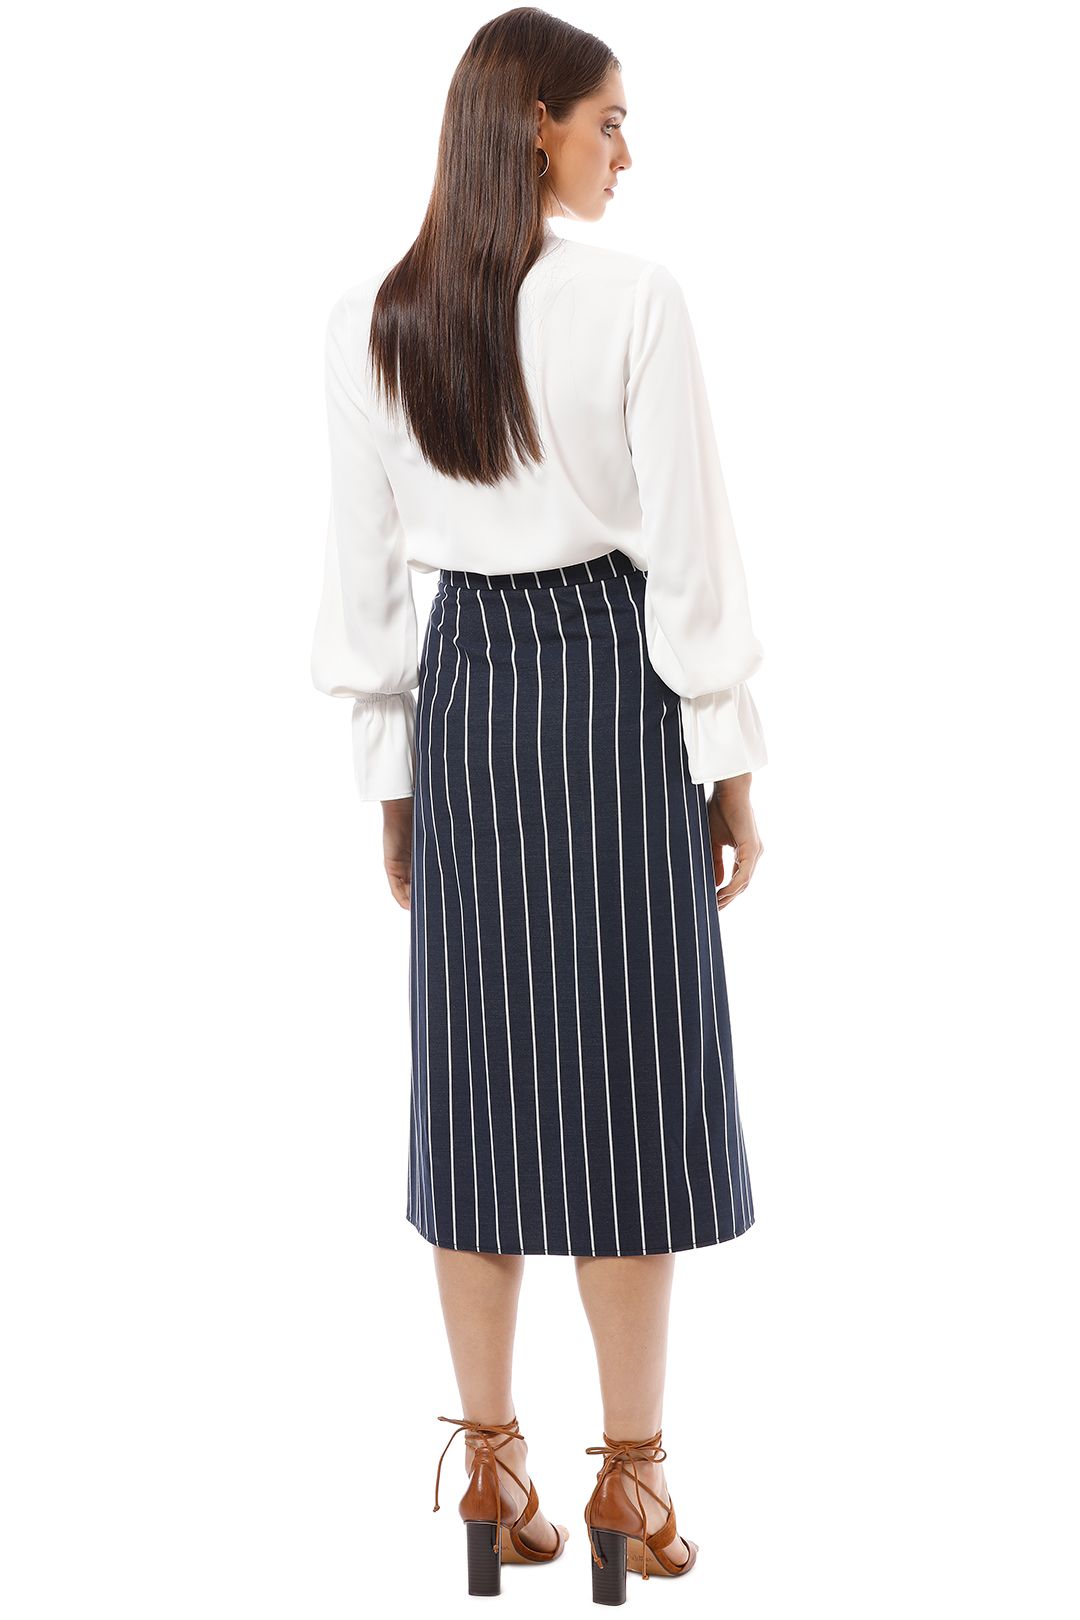 Veronika Maine - Textured Stripe Zip Skirt - Navy - Back